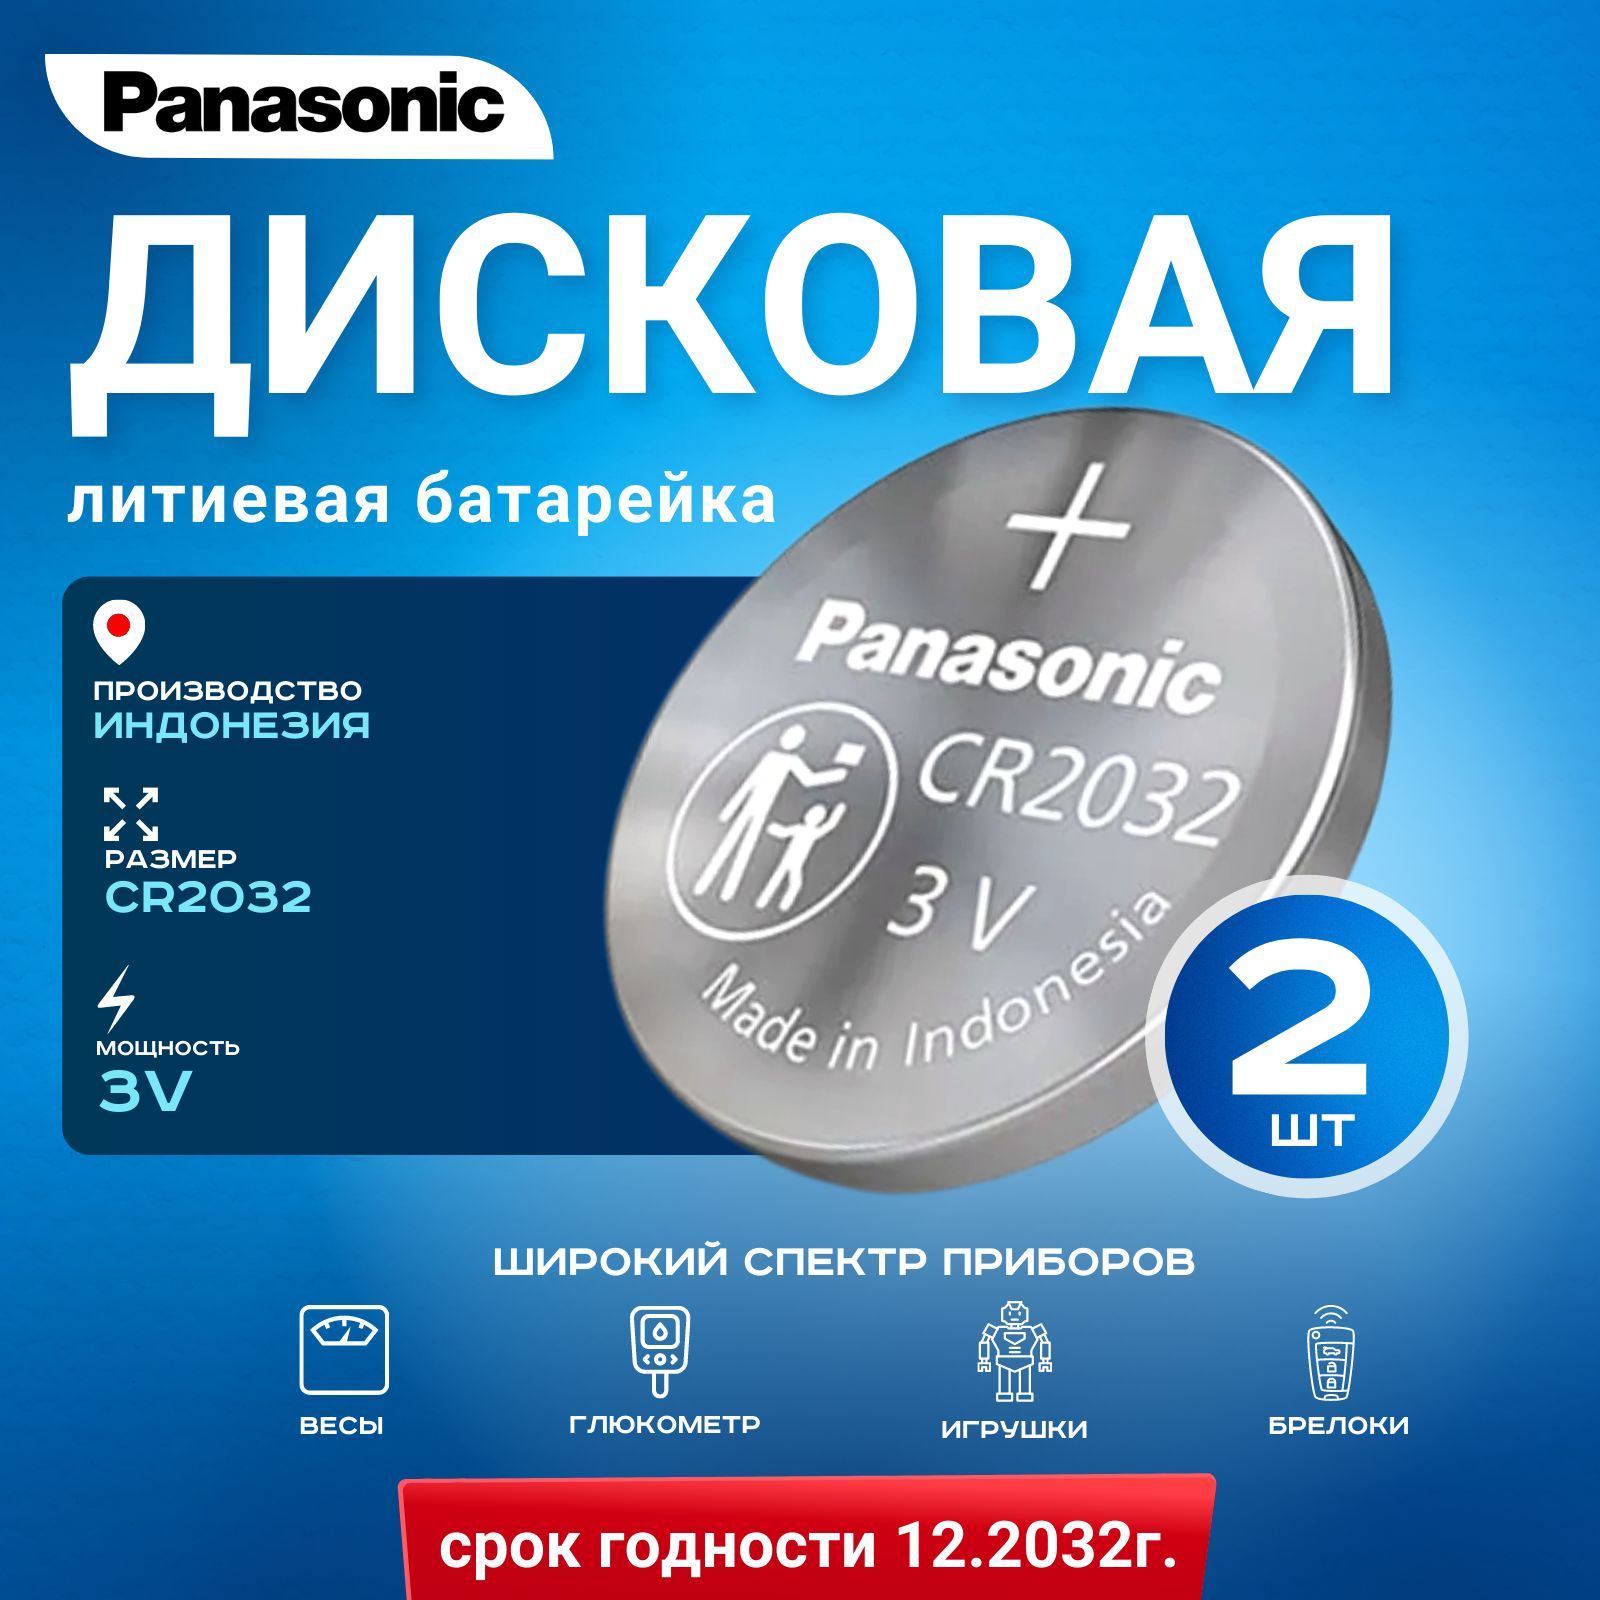 PanasonicБатарейкаCR2032,Литиевыйтип,3В,2шт